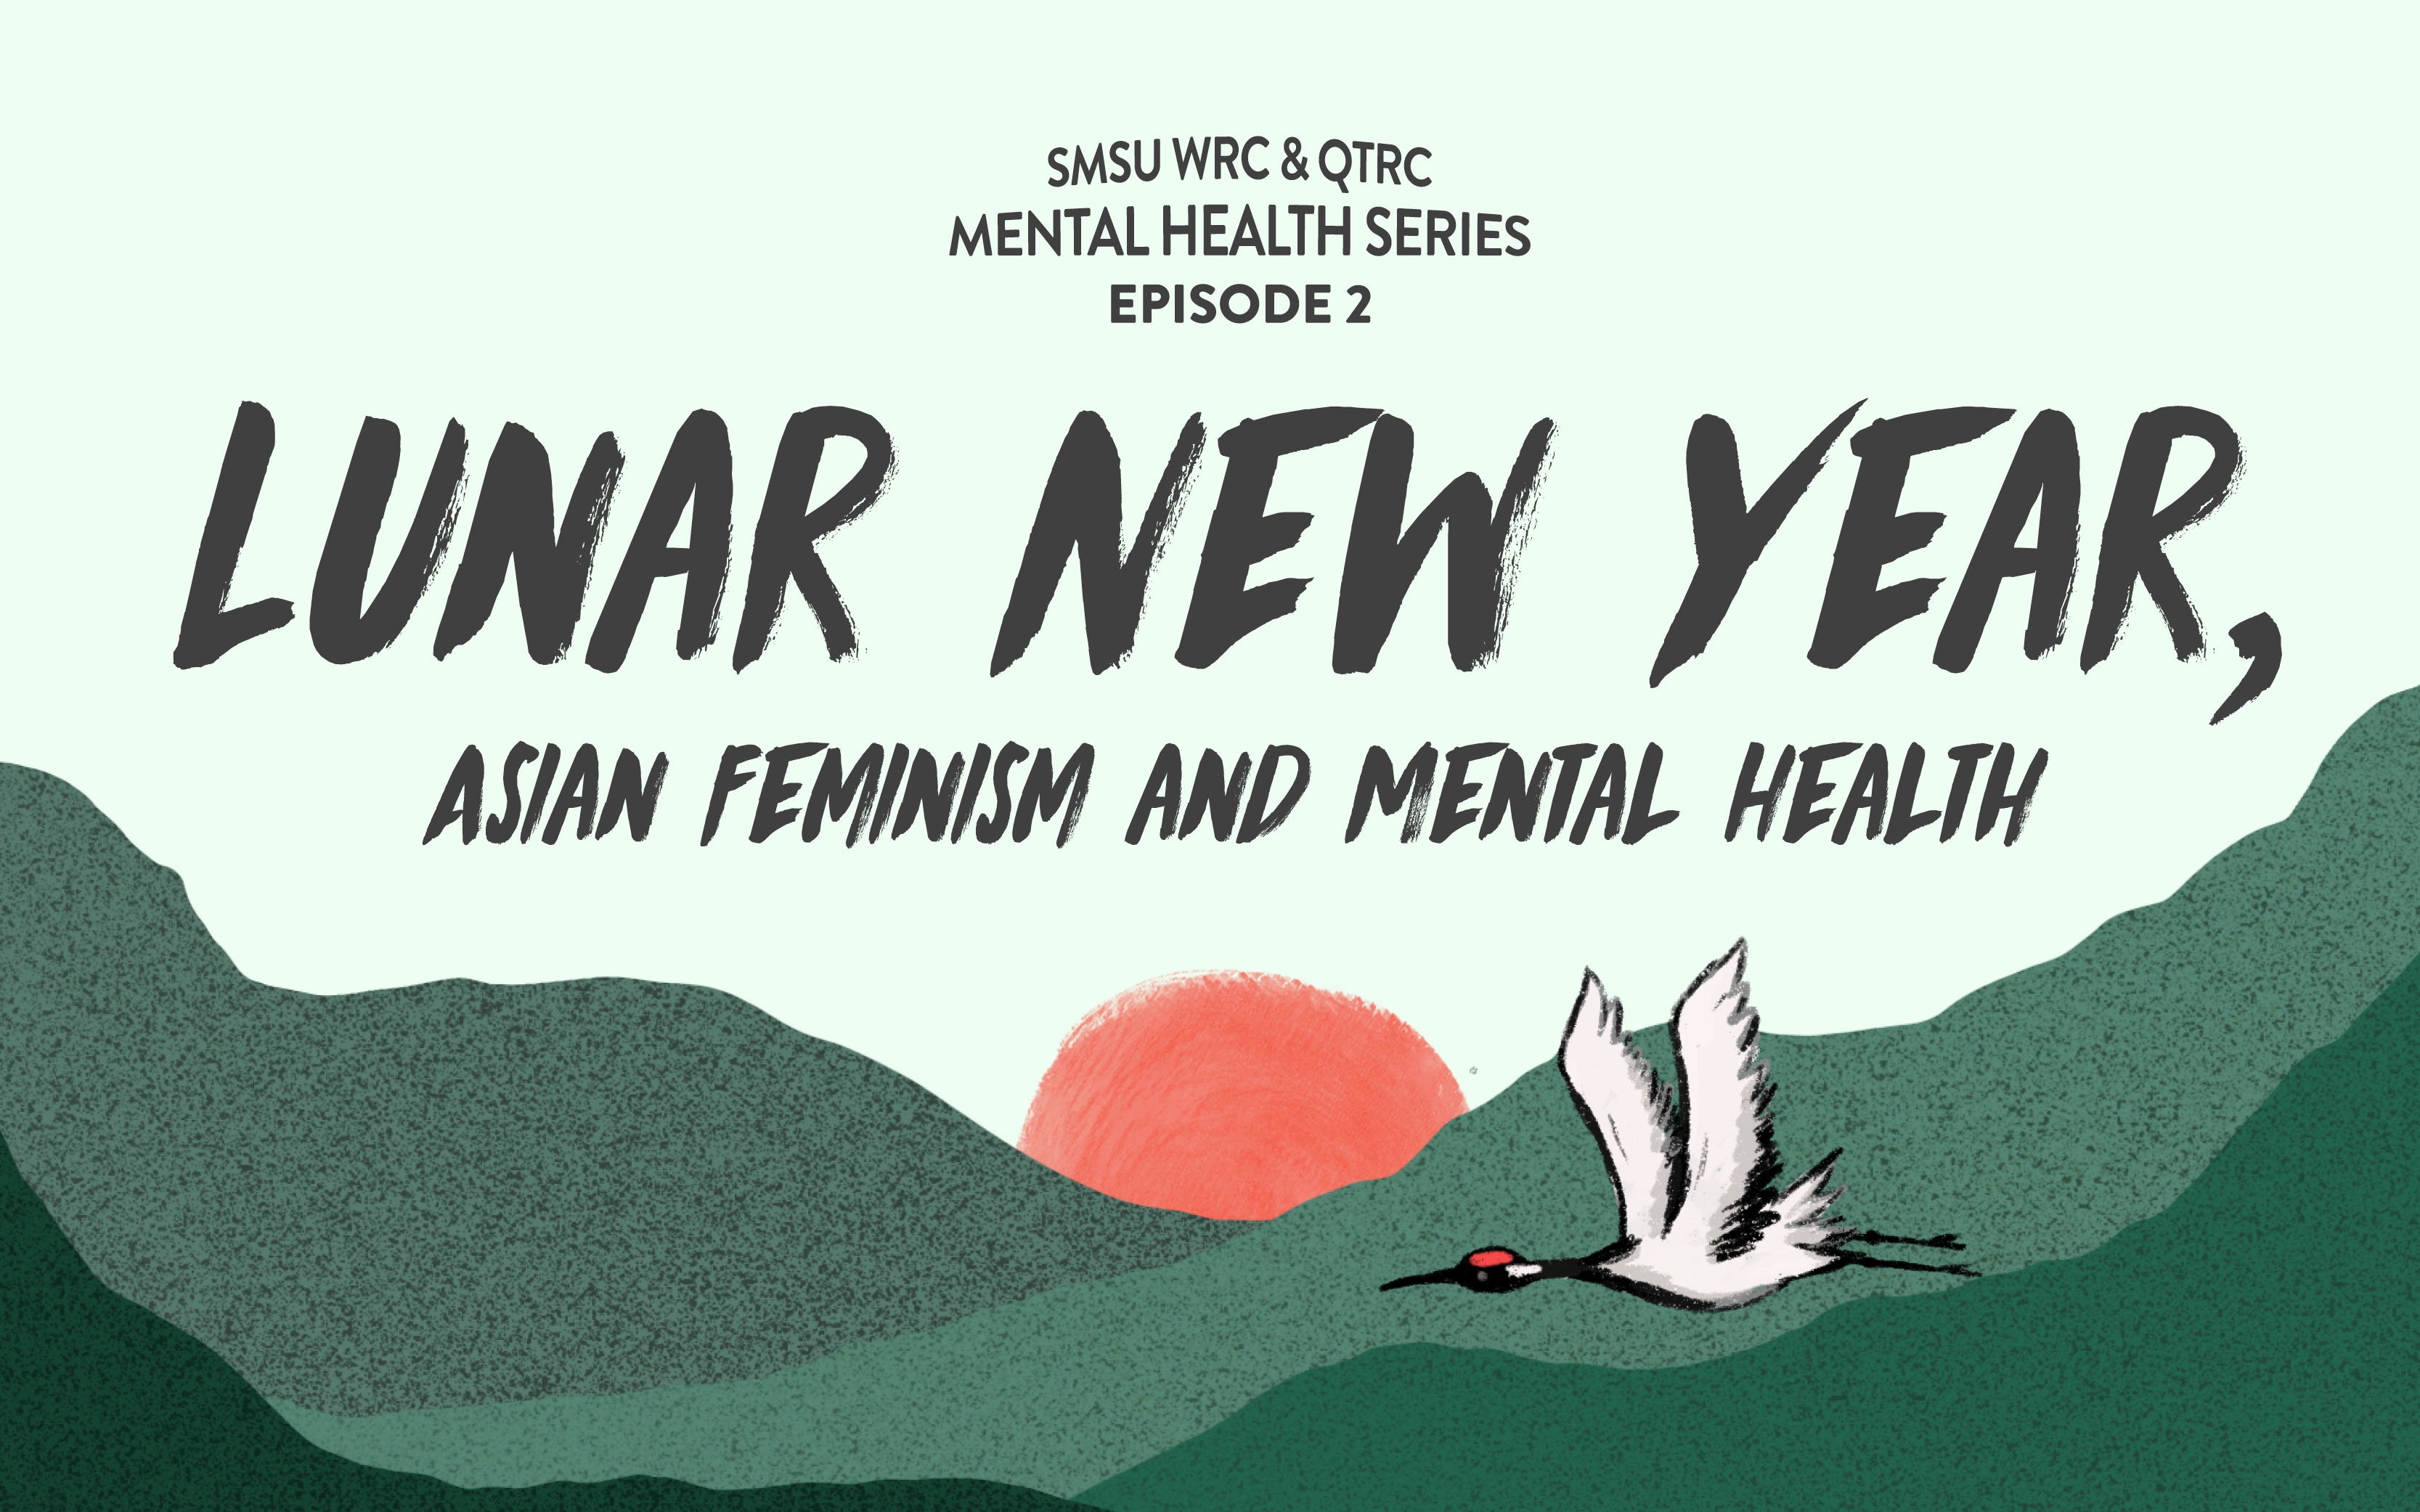 Mental Health Series: Lunar New Year - Asian Feminism and Mental Health